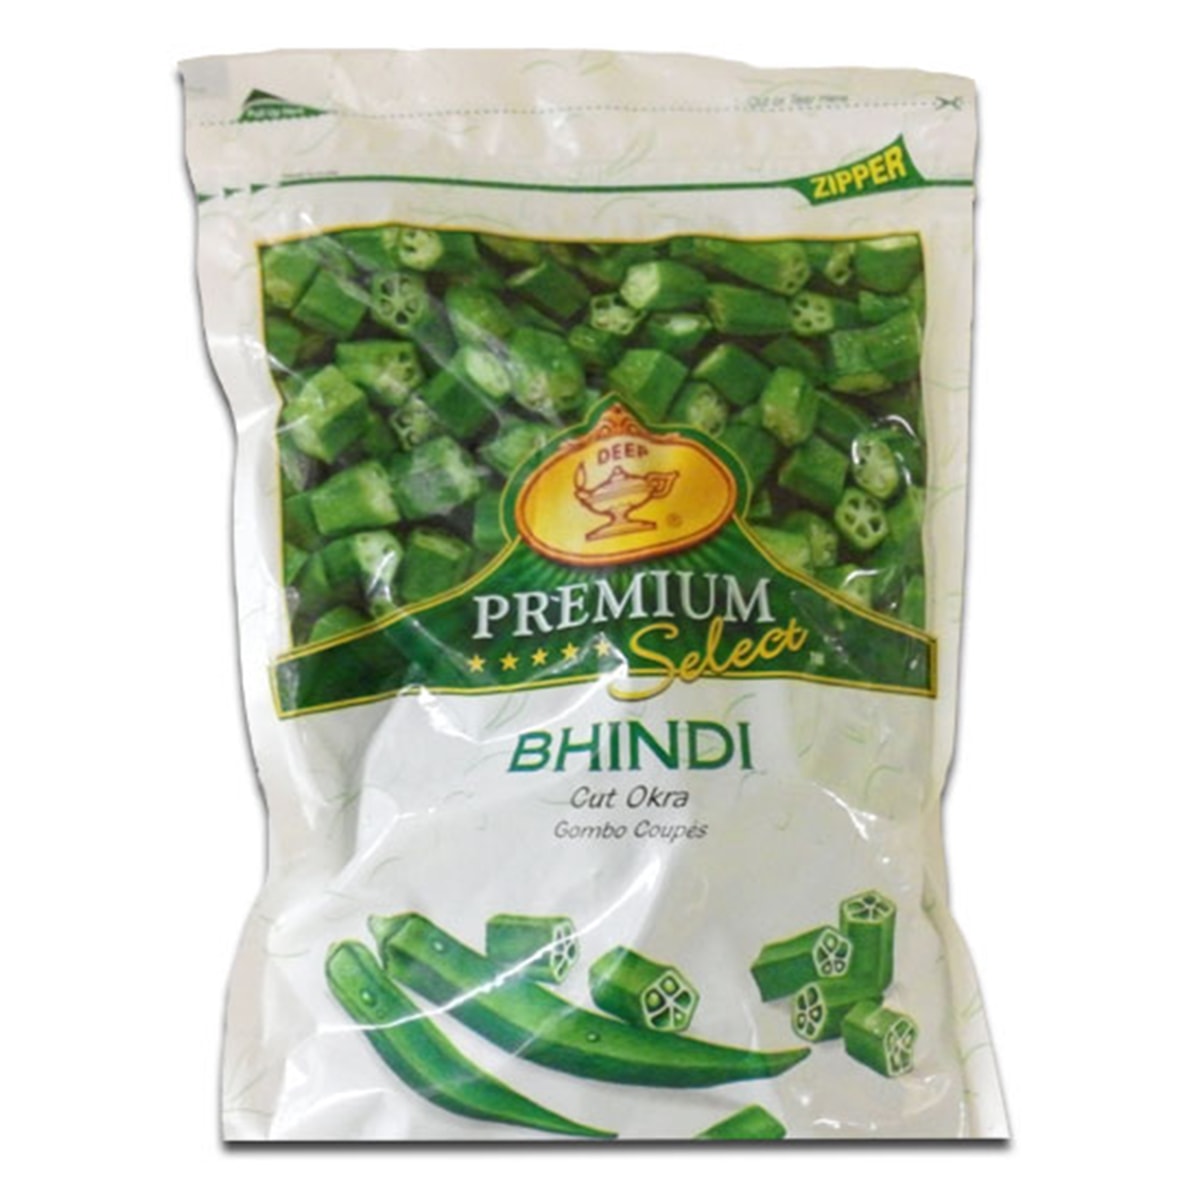 Buy Deep Foods Cut Okra (Bhindi) Frozen - 340 gm